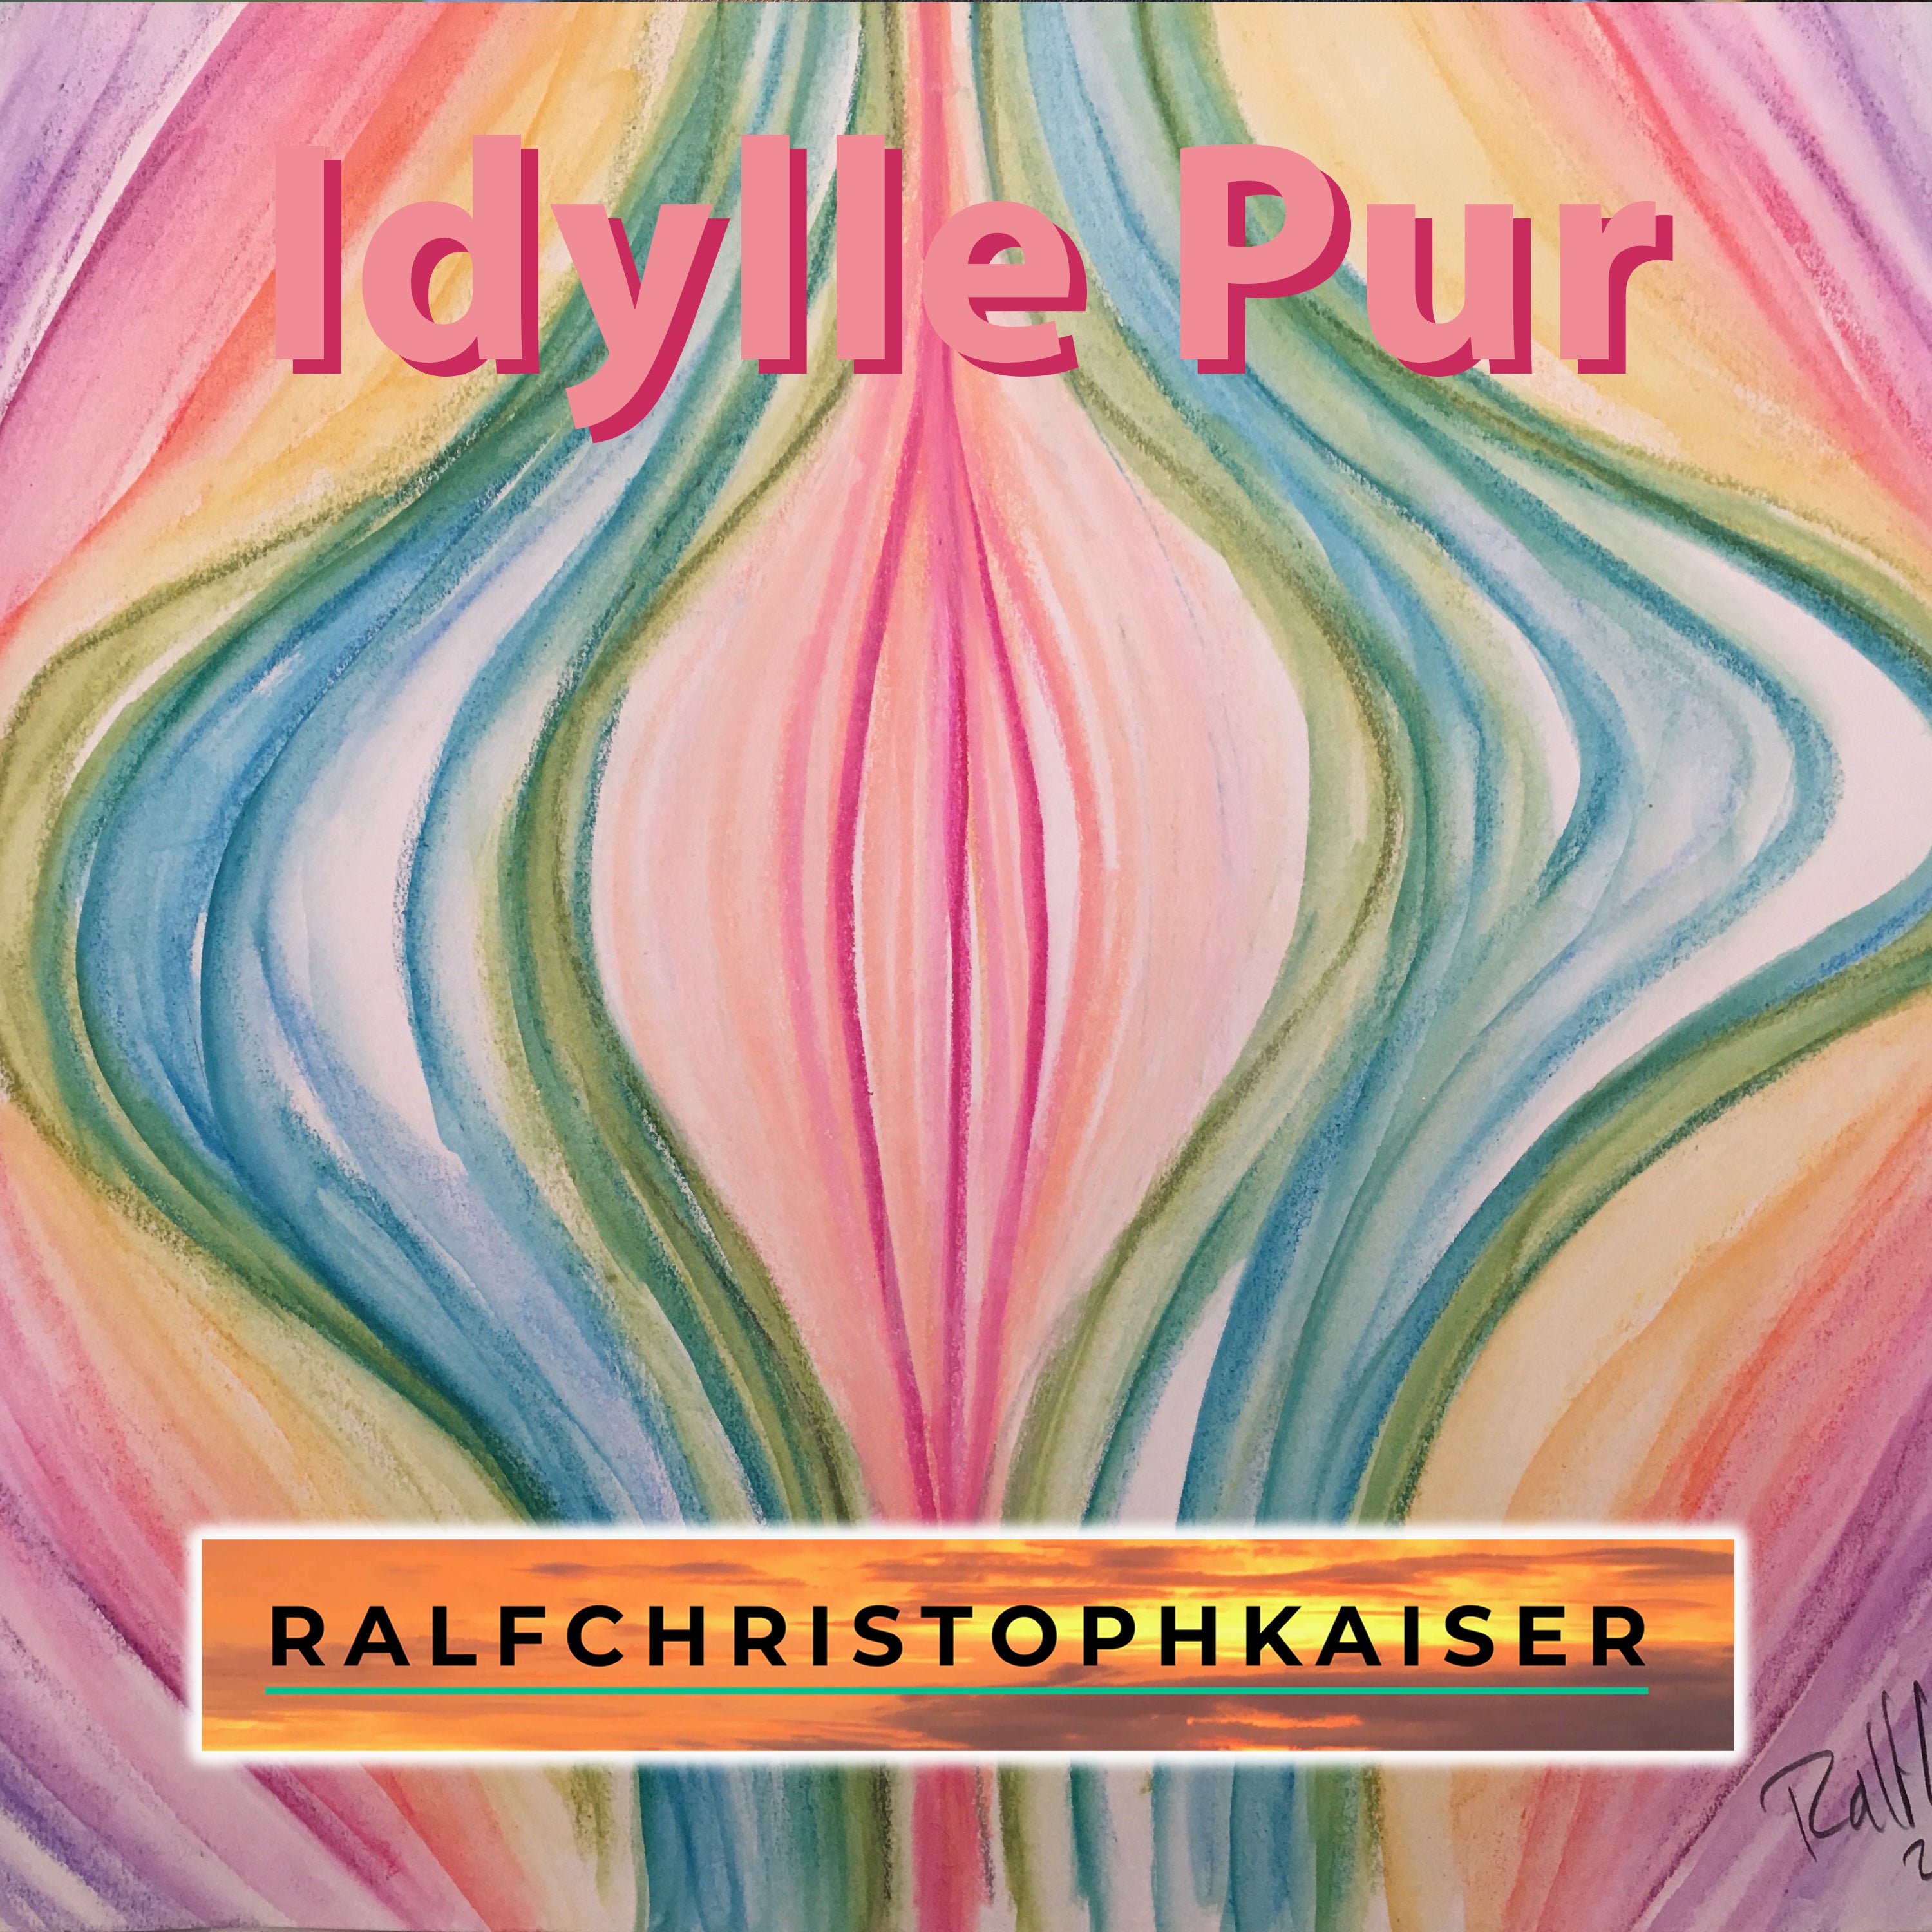 Idylle Pur new Hitsingle by Ralf Christoph Kaiser in High Resolution Wav file - ralfchristophkaiser.com Musik und Noten